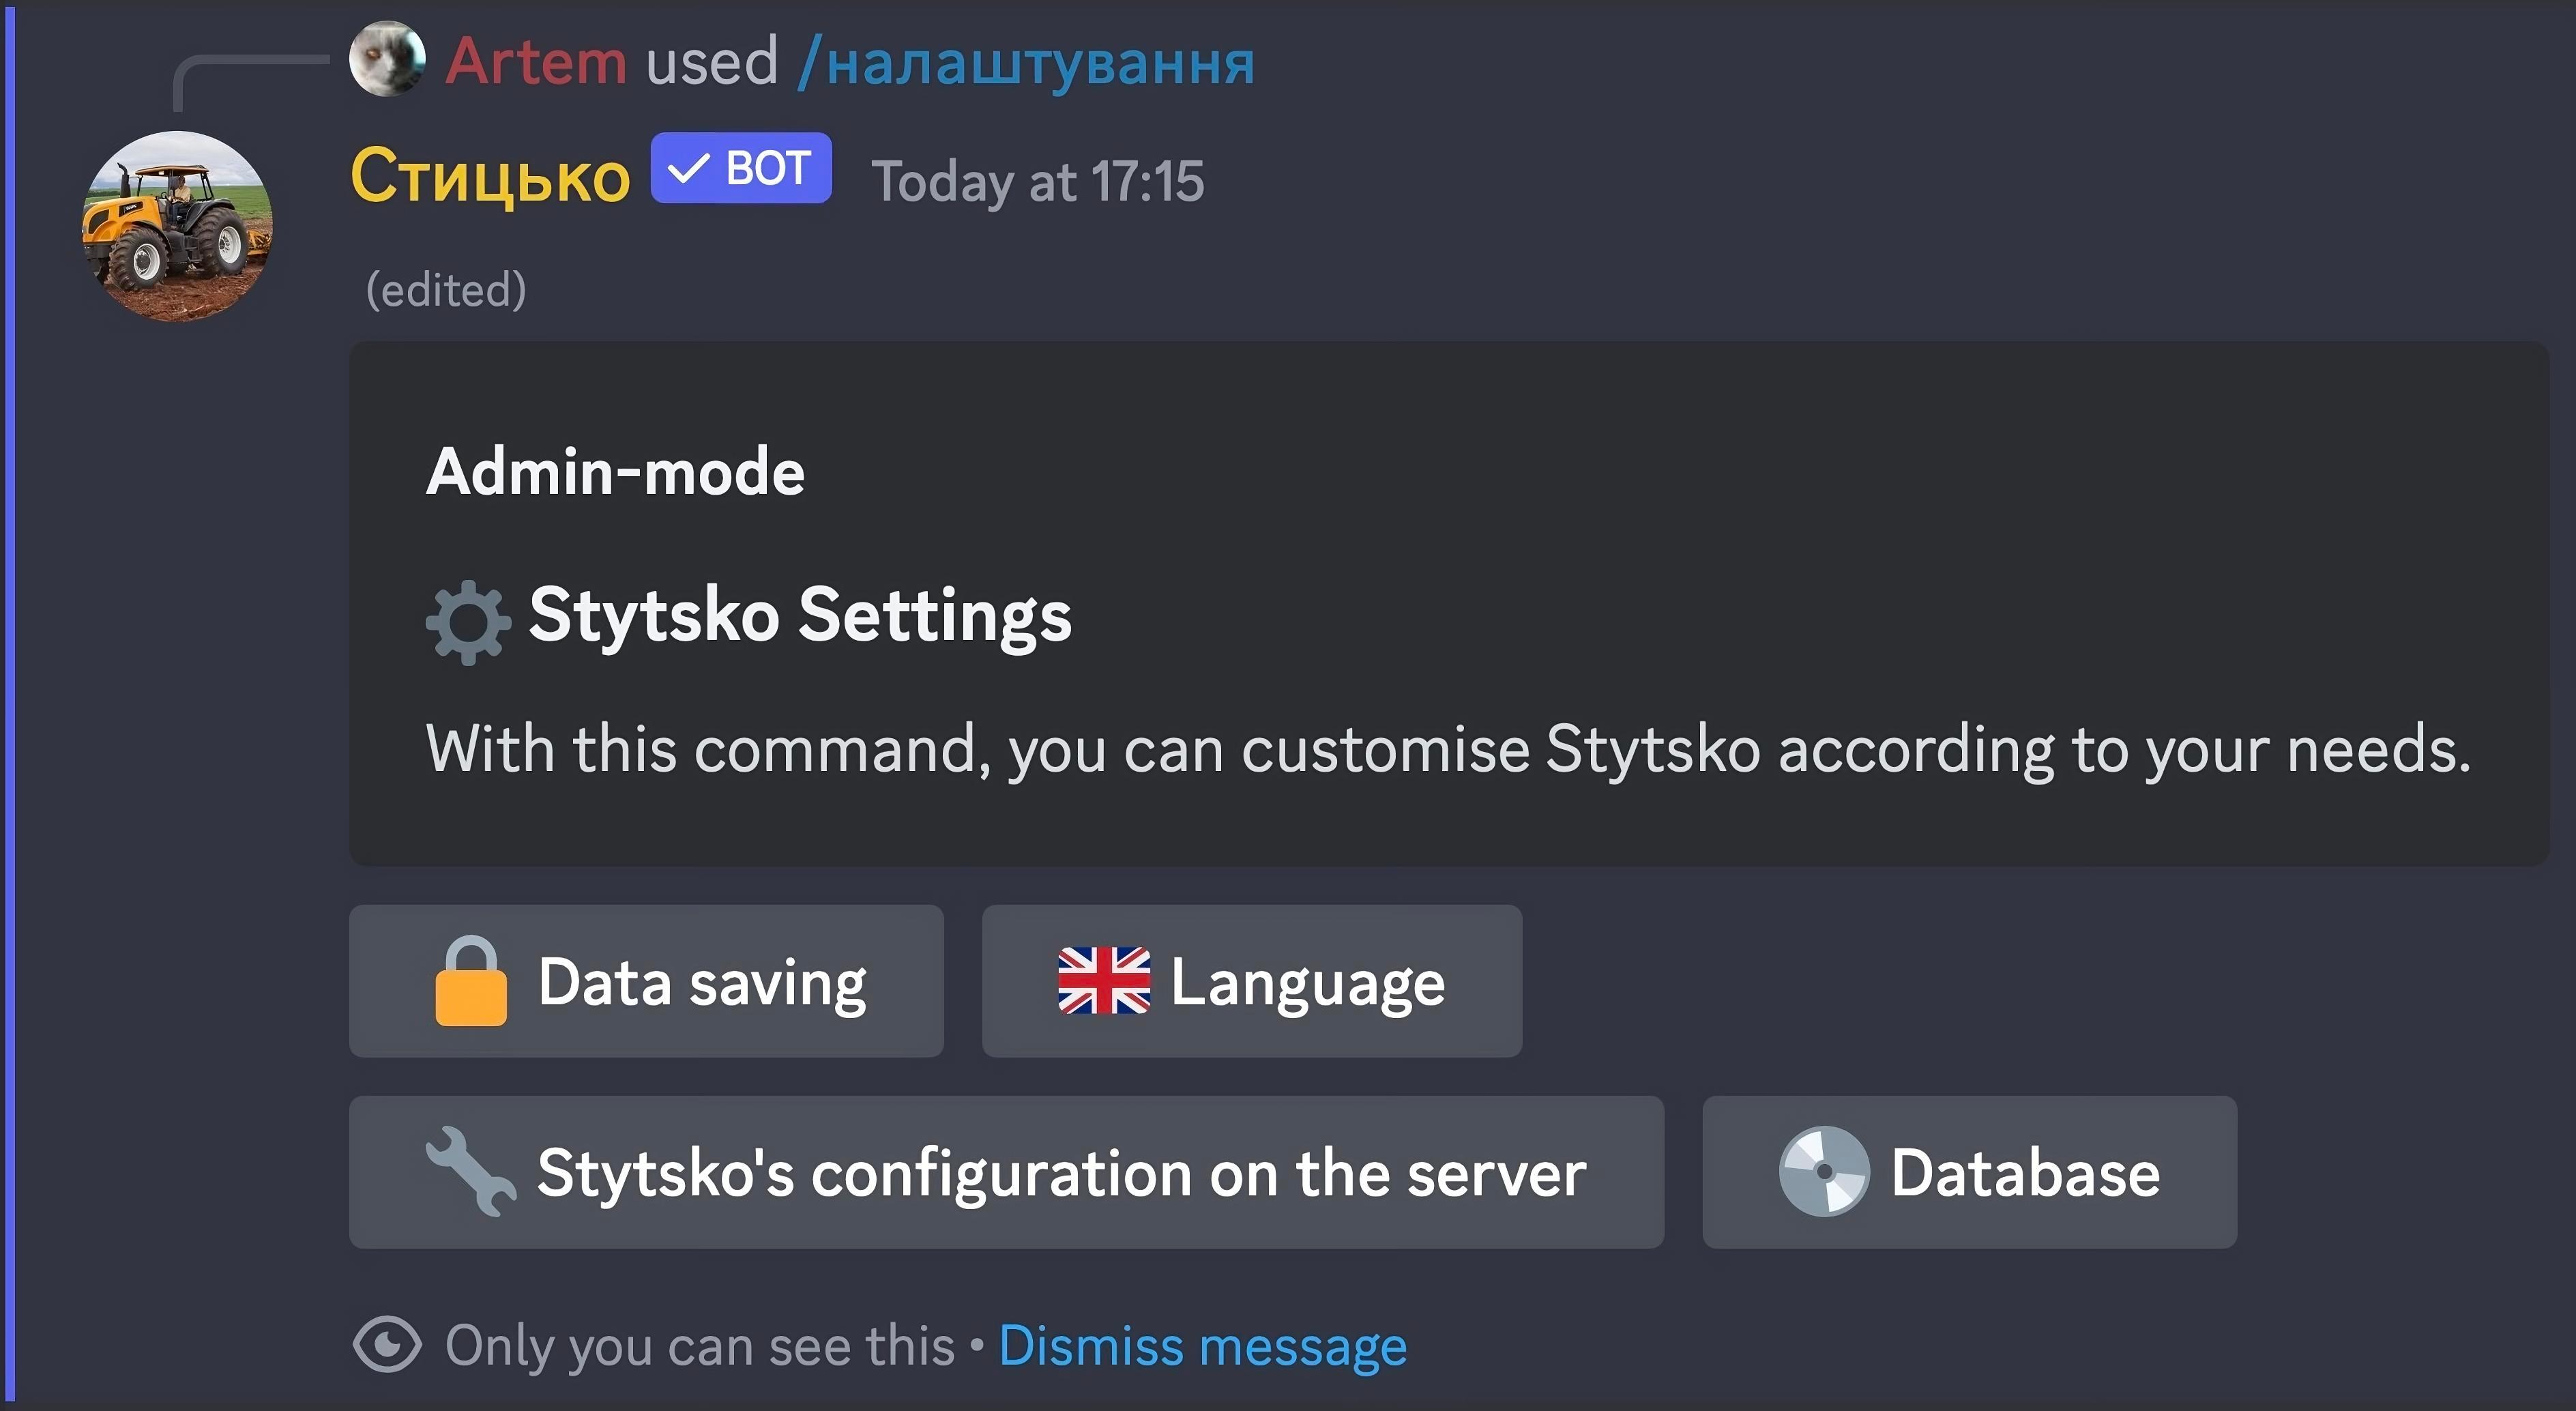 Stytsko's settings menu